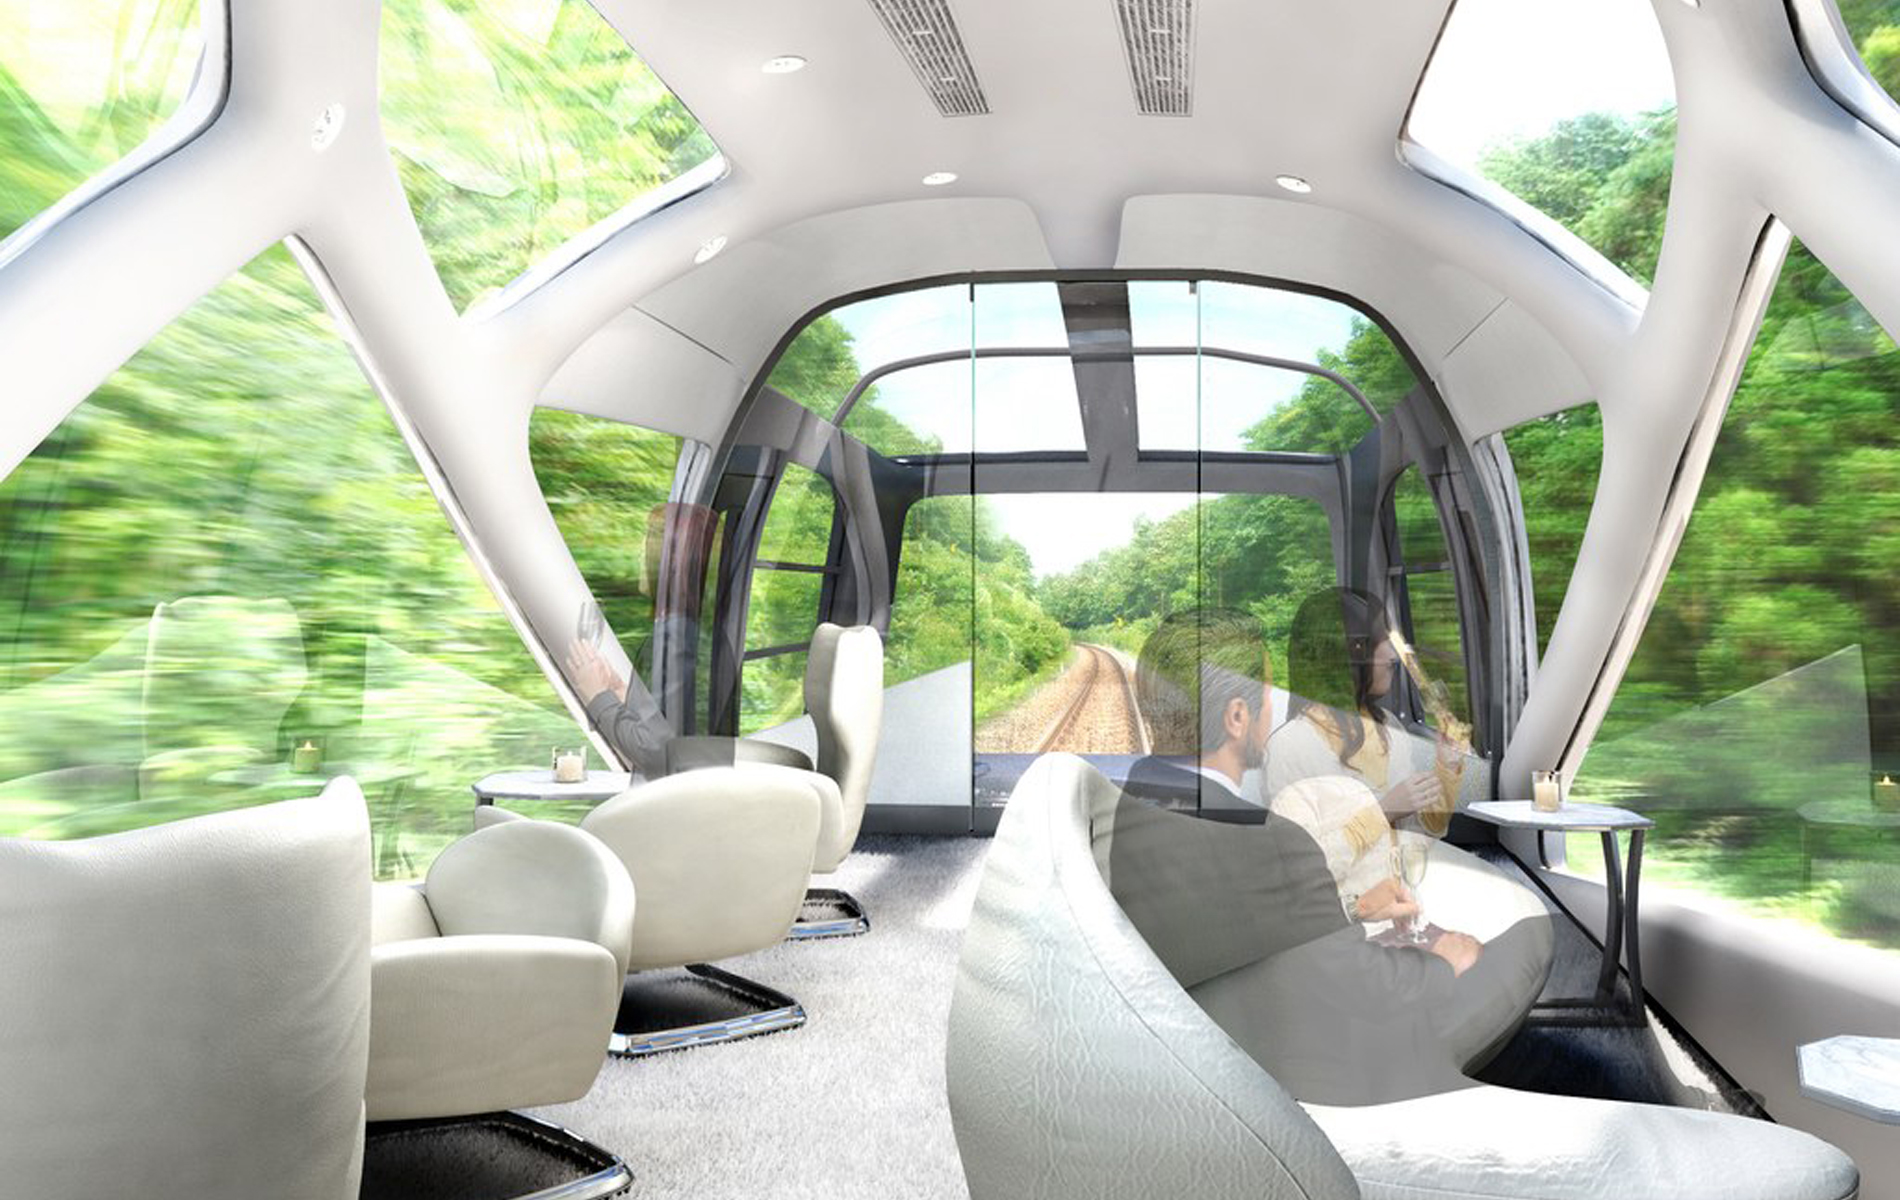 Japan’s New Shiki-Shima Luxury Train